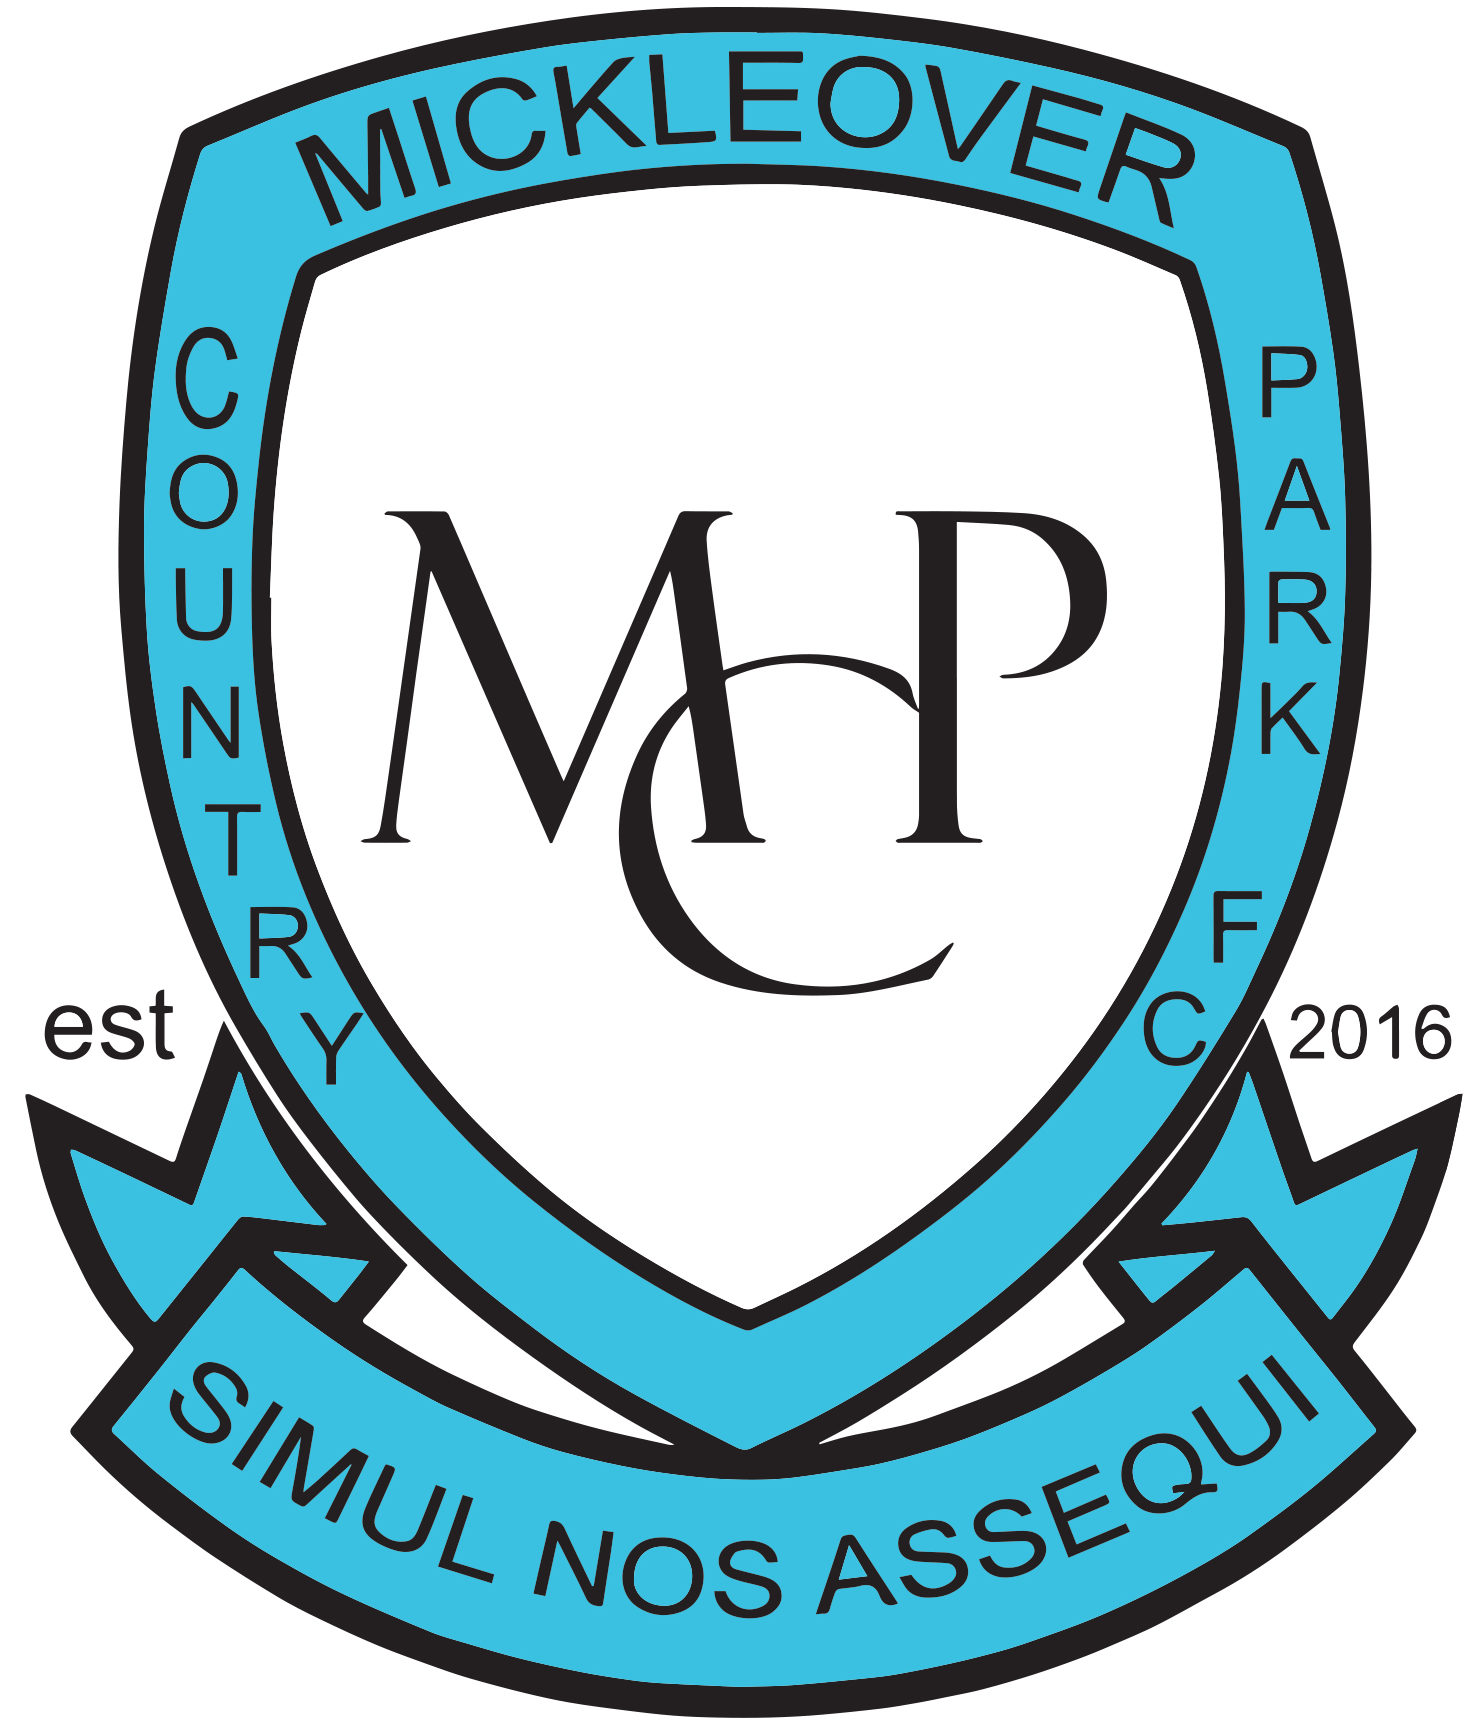 MICKLEOVER COUNTRY PARK AND SOCIAL CLUB logo